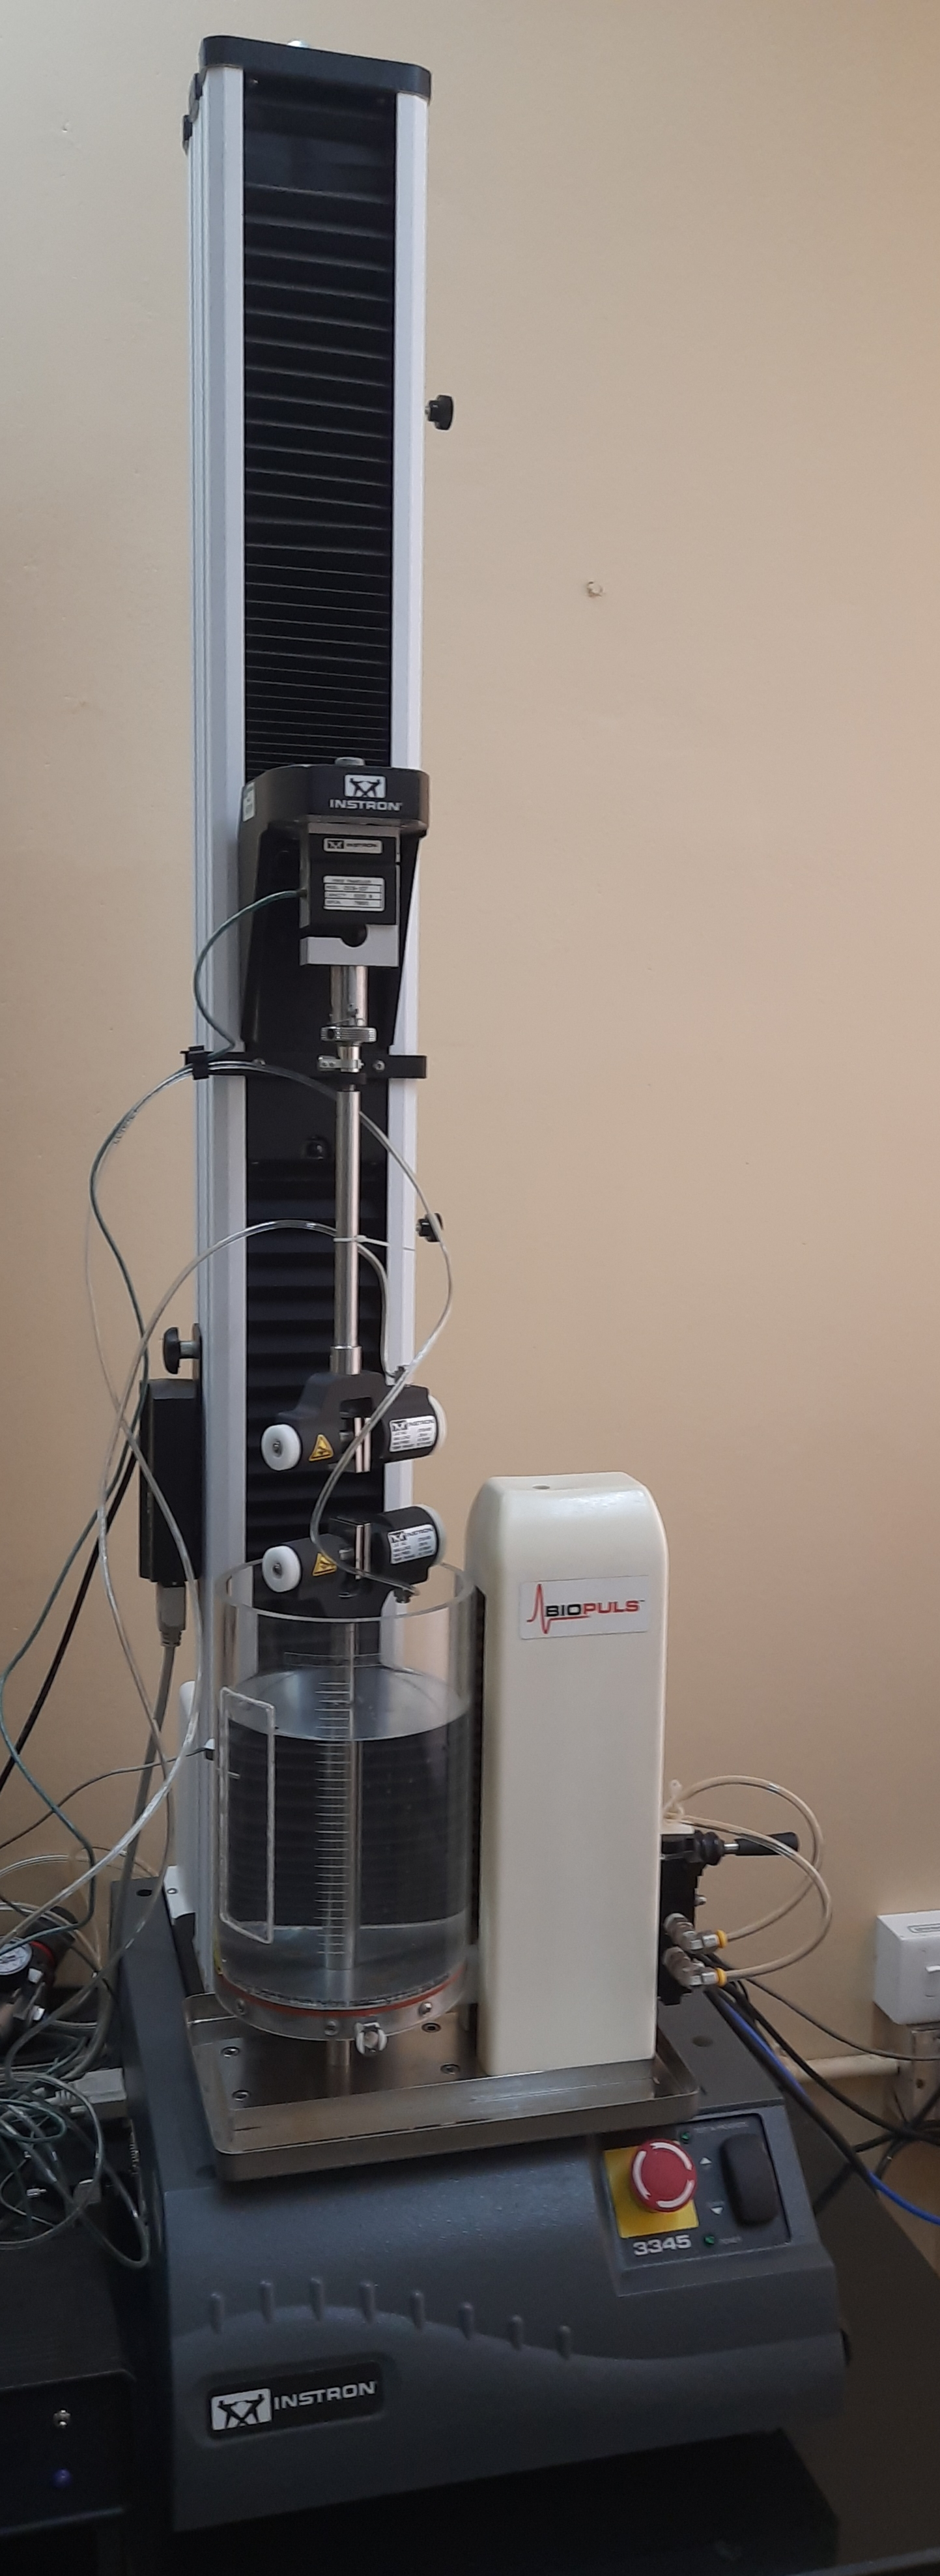 Universal Testing Machine (UTM) Equipped with BioPuls Bath